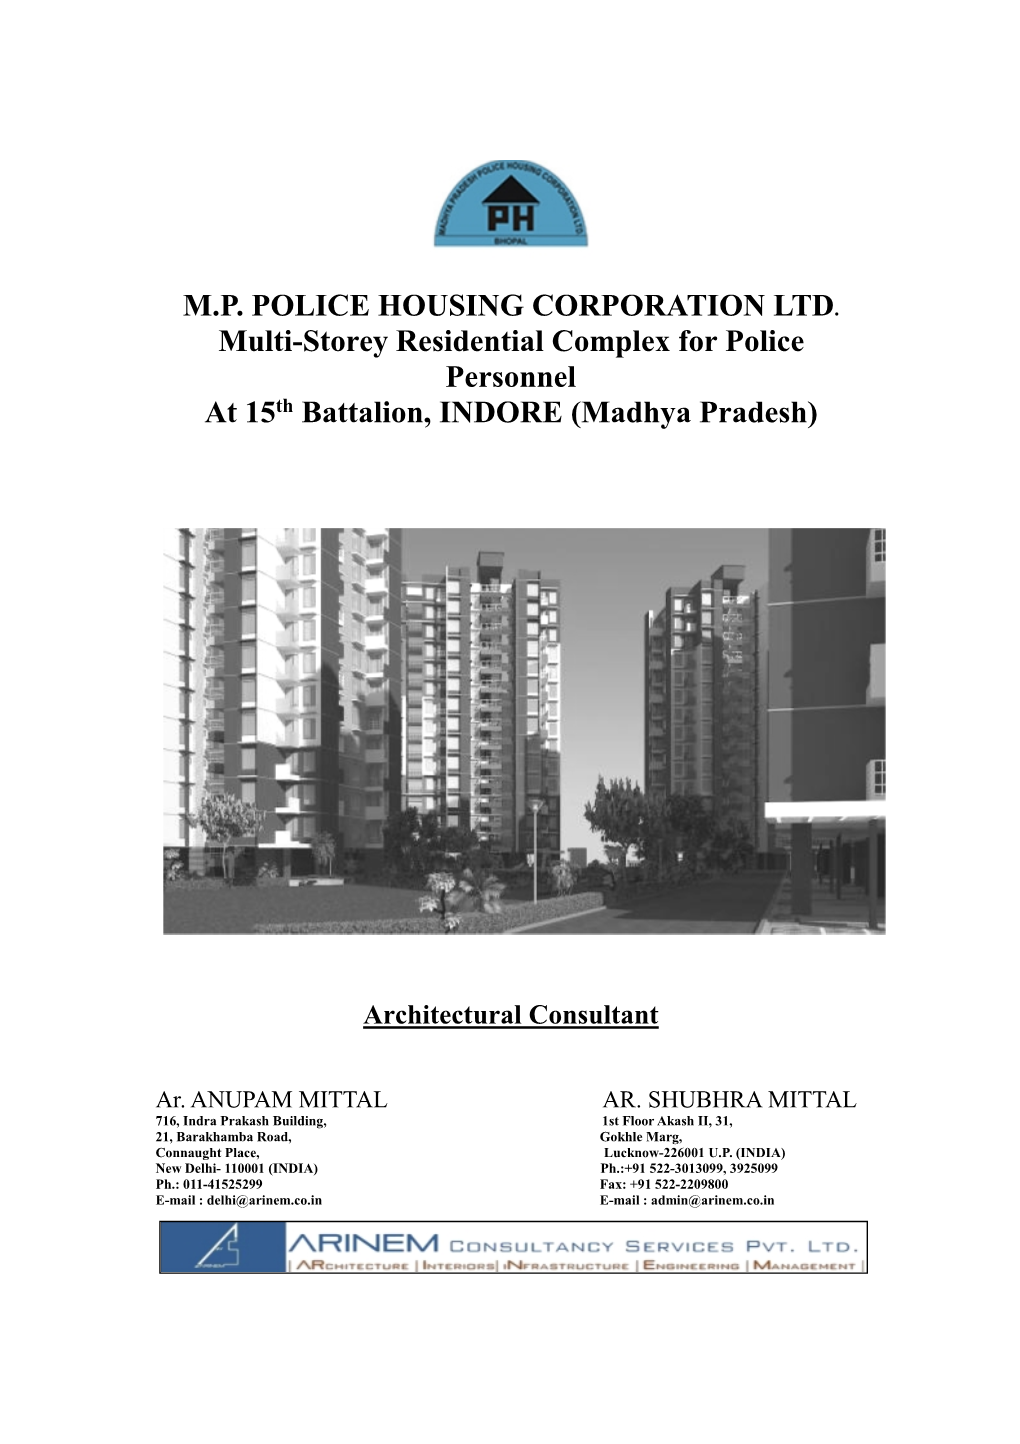 M.P. POLICE HOUSING CORPORATION LTD Multi-Storey